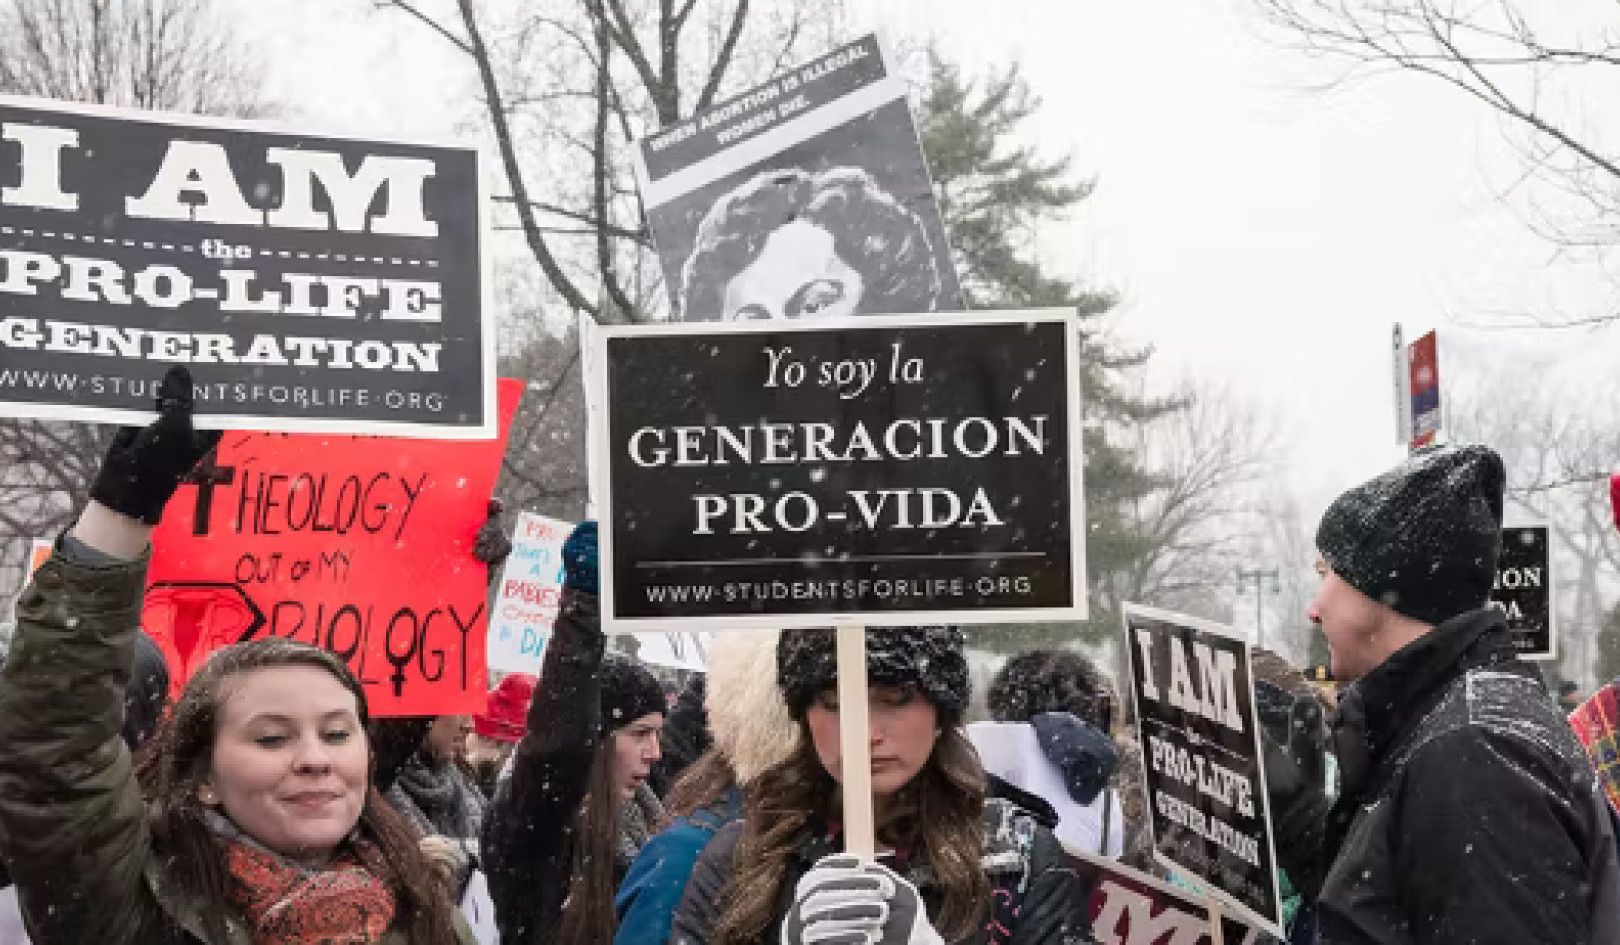 Hva driver egentlig anti-aborttro?